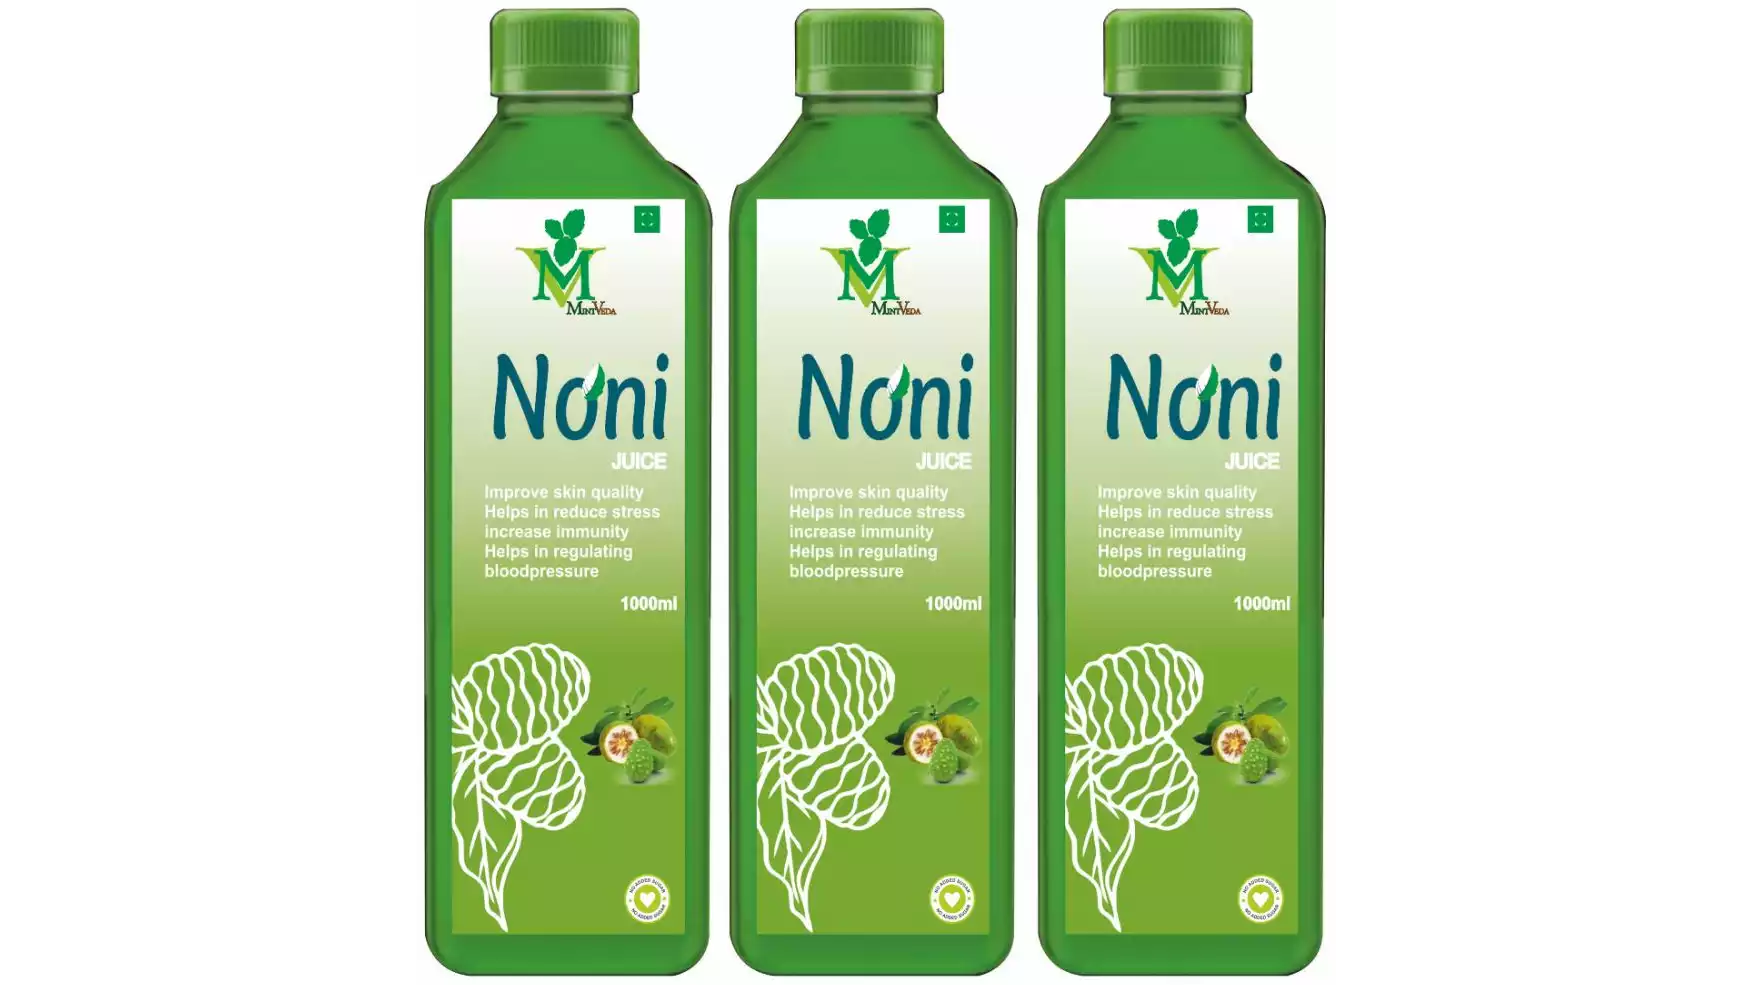 Mint Veda Noni (Sugar Free) Juice (1liter, Pack of 3)